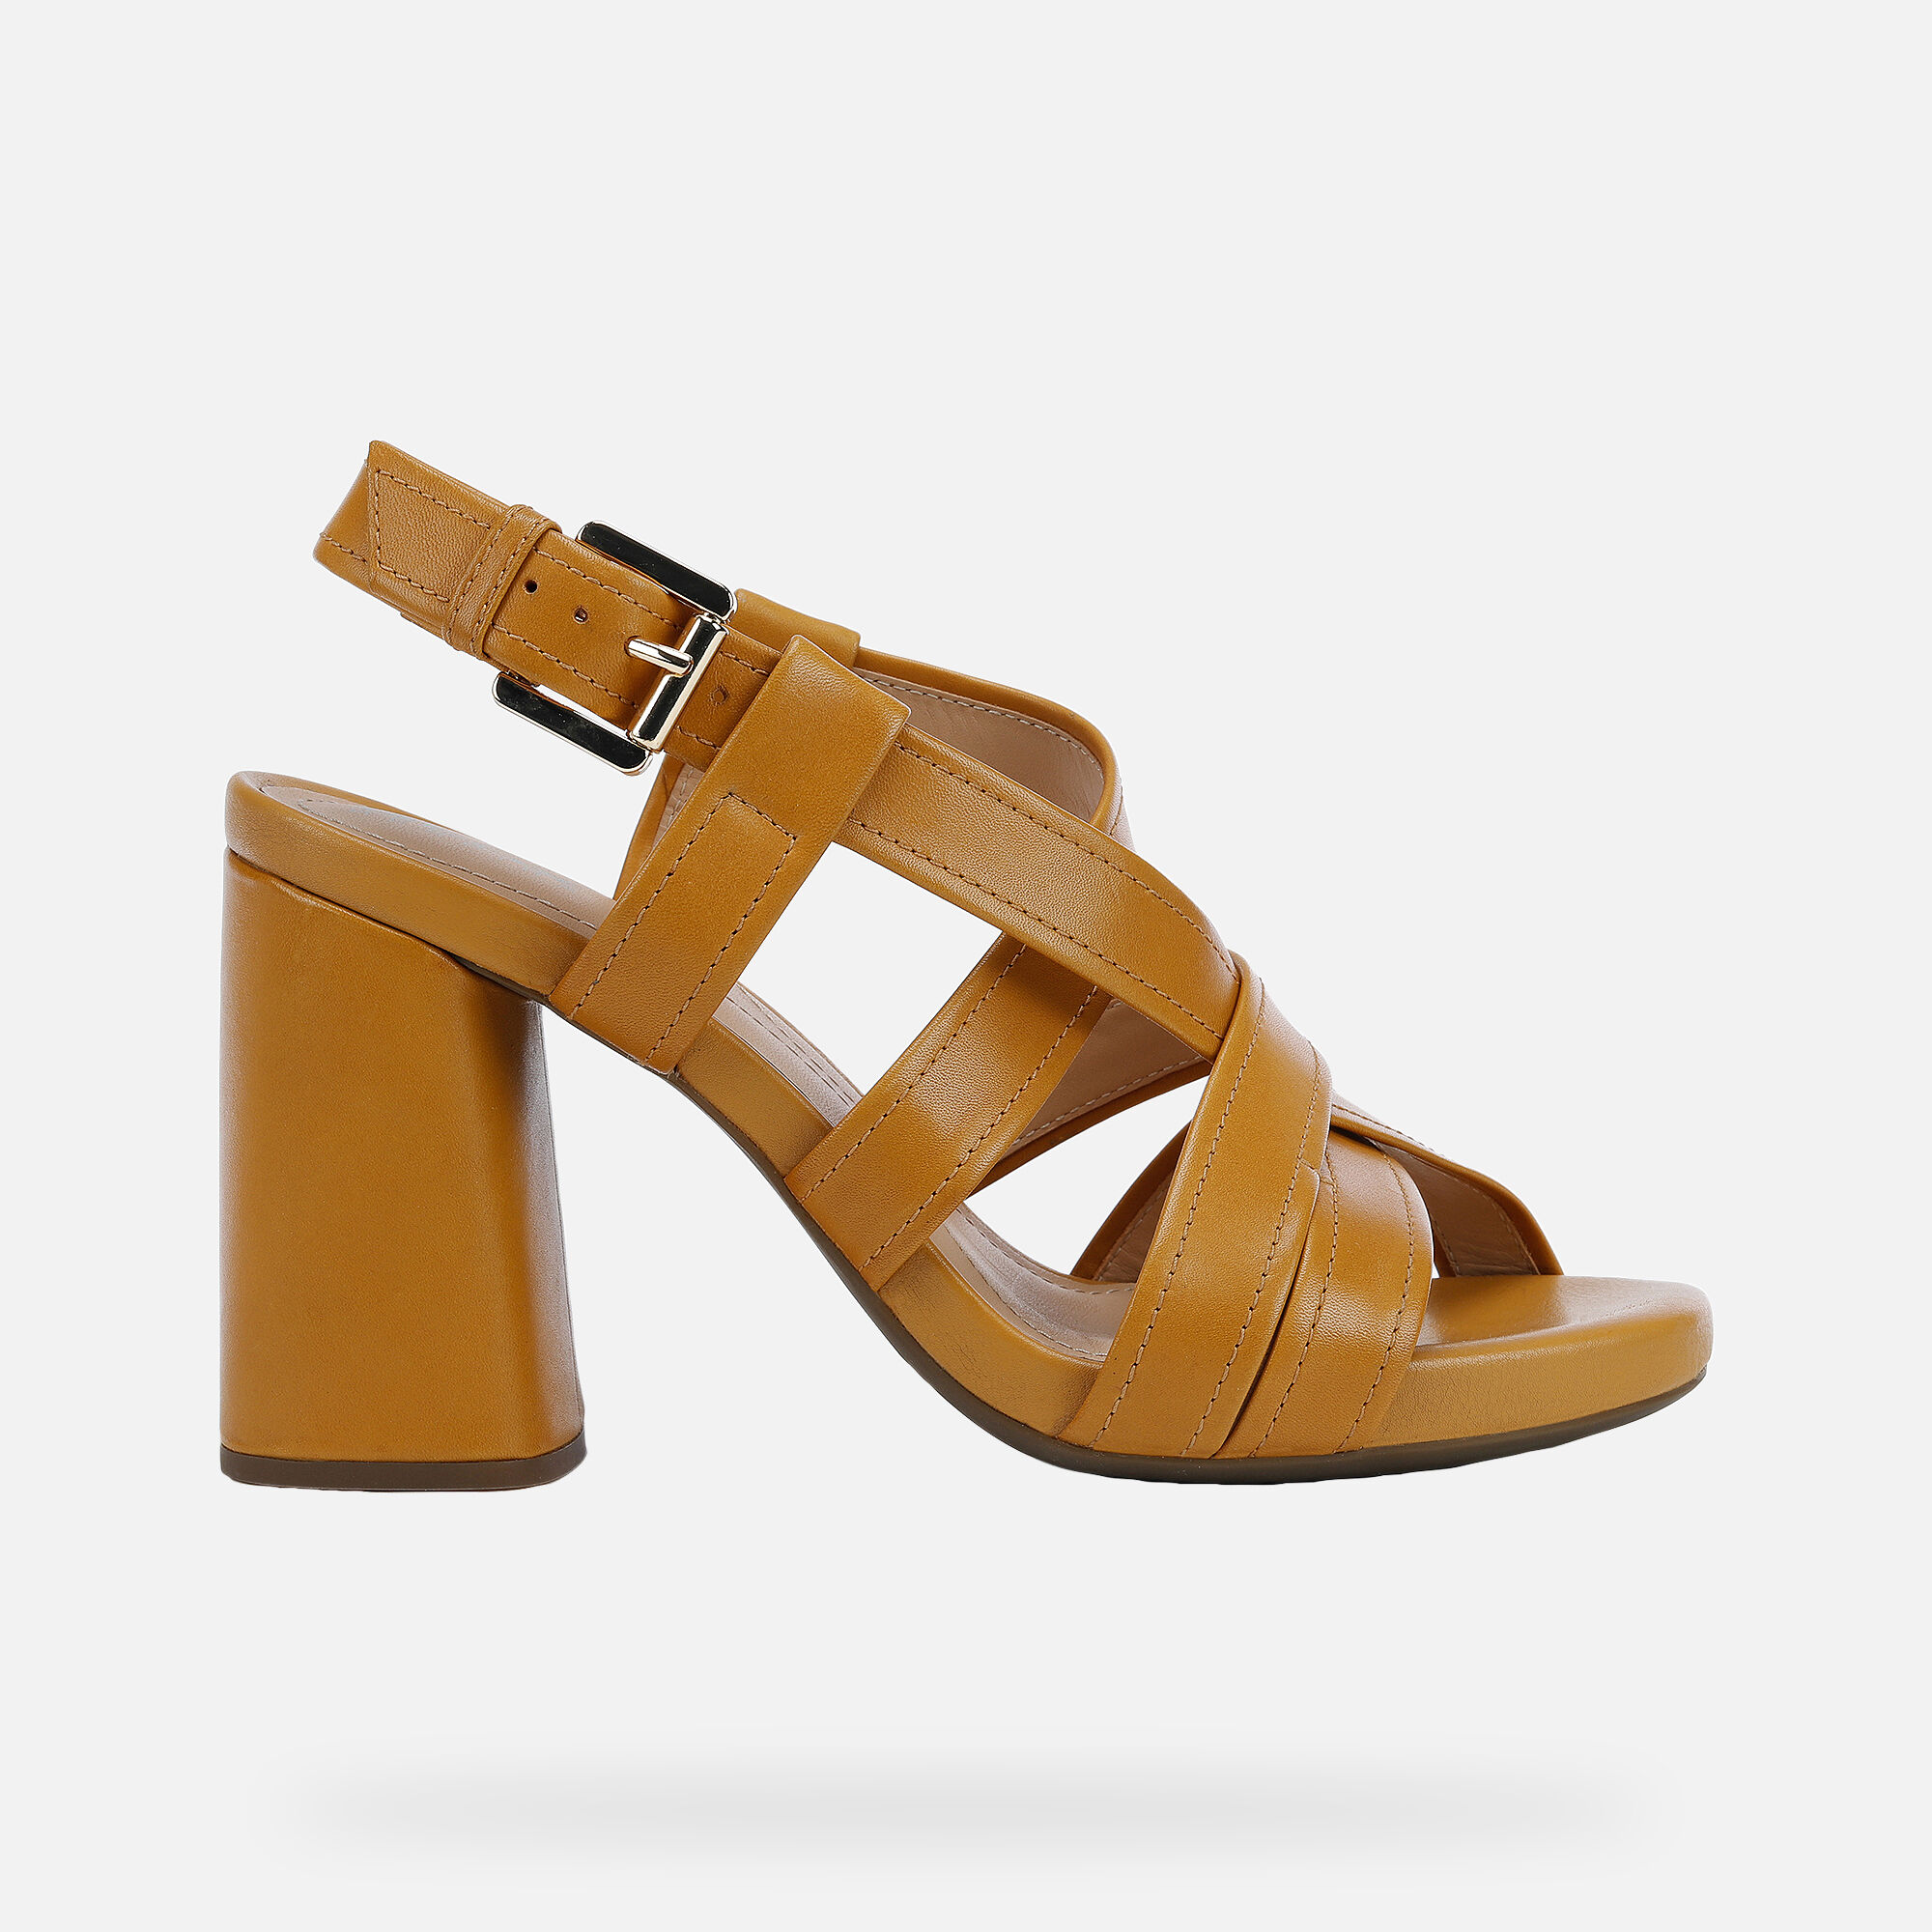 Geox GENZIANA Woman: Ochre Sandals | Geox ® SS 20